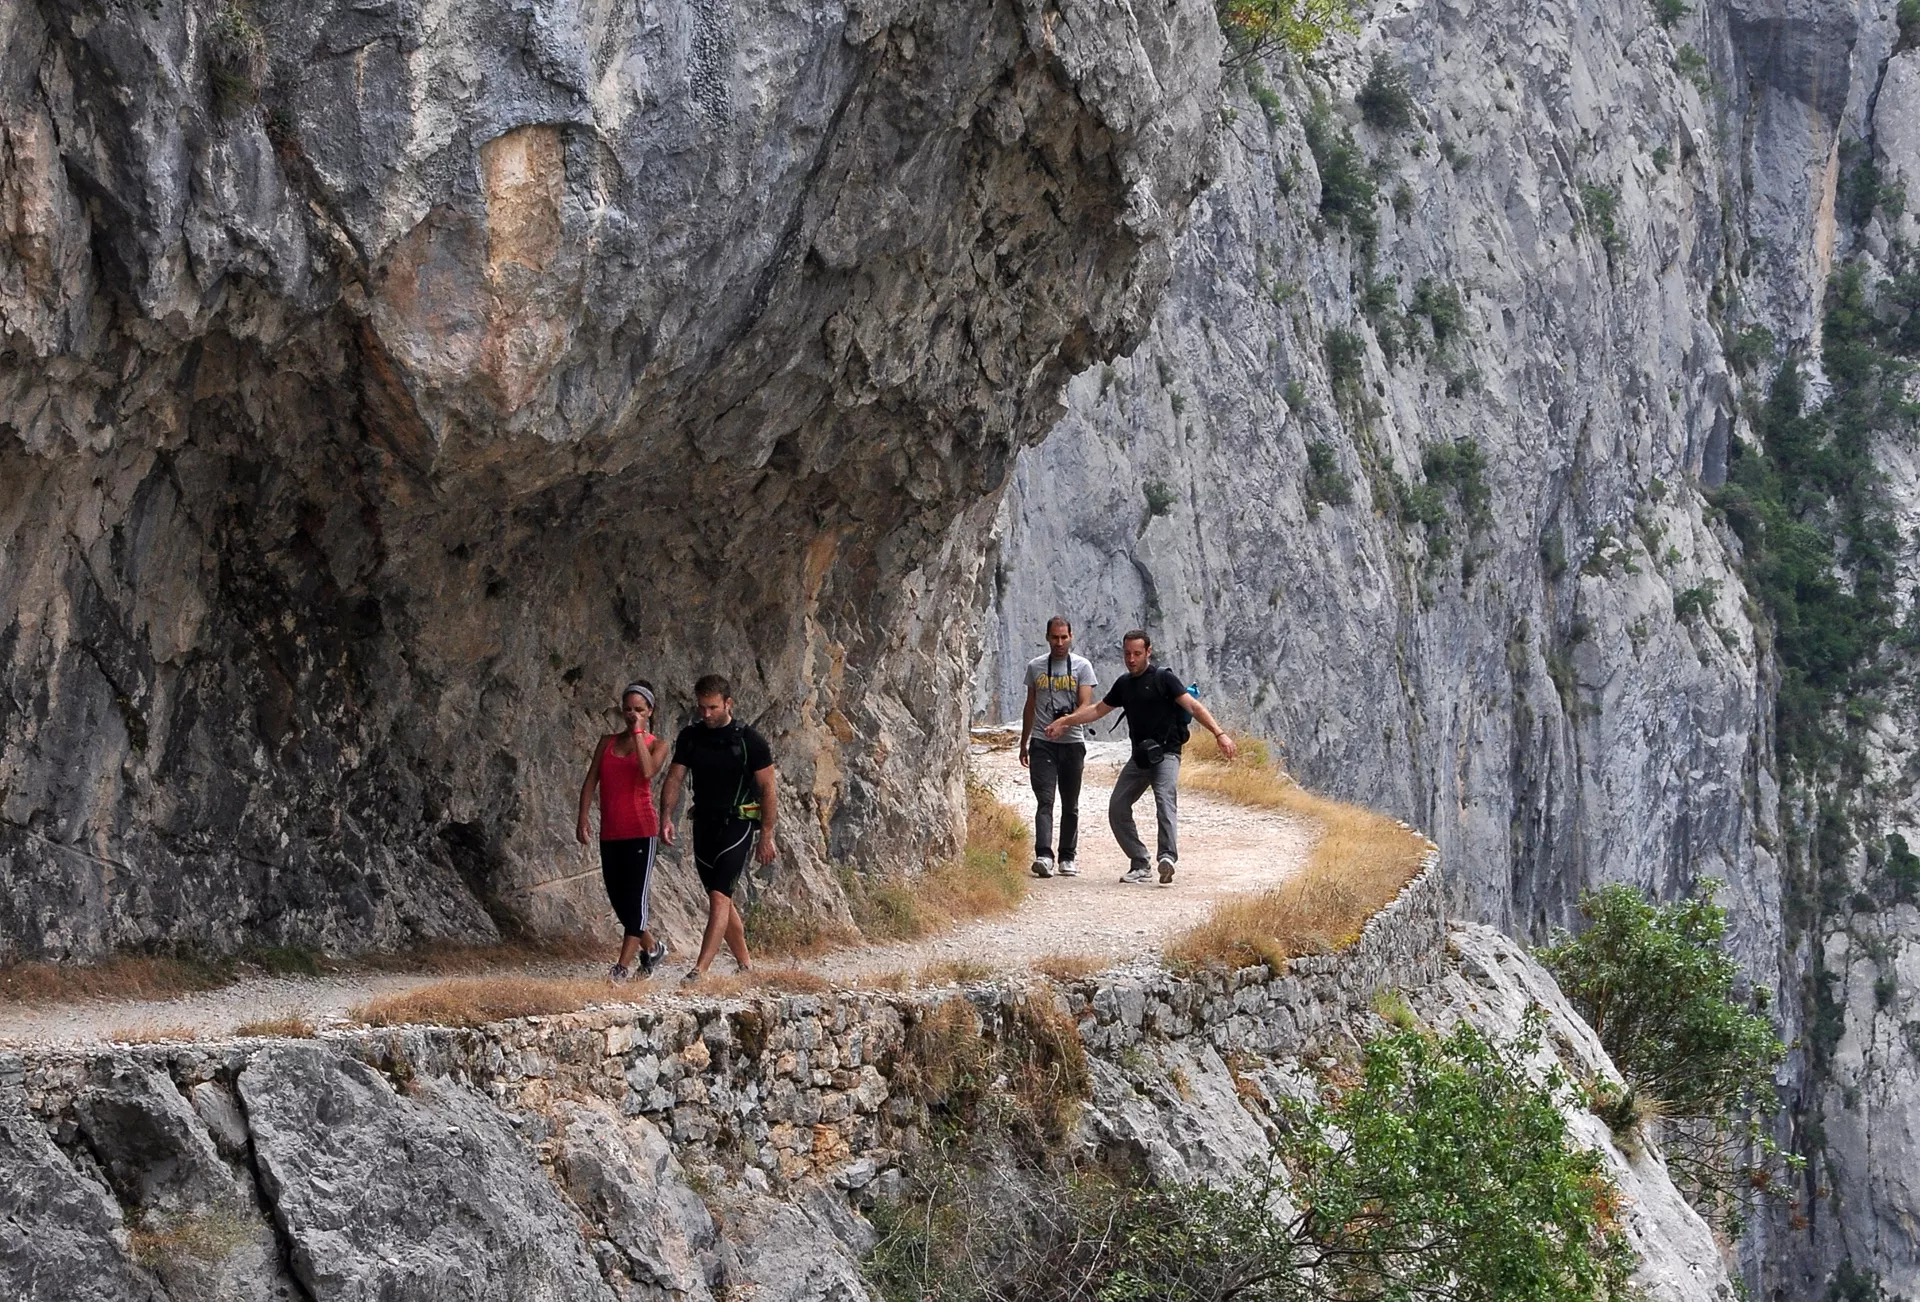 Ruta del Cares in Spain, Europe | Trekking & Hiking - Rated 3.6